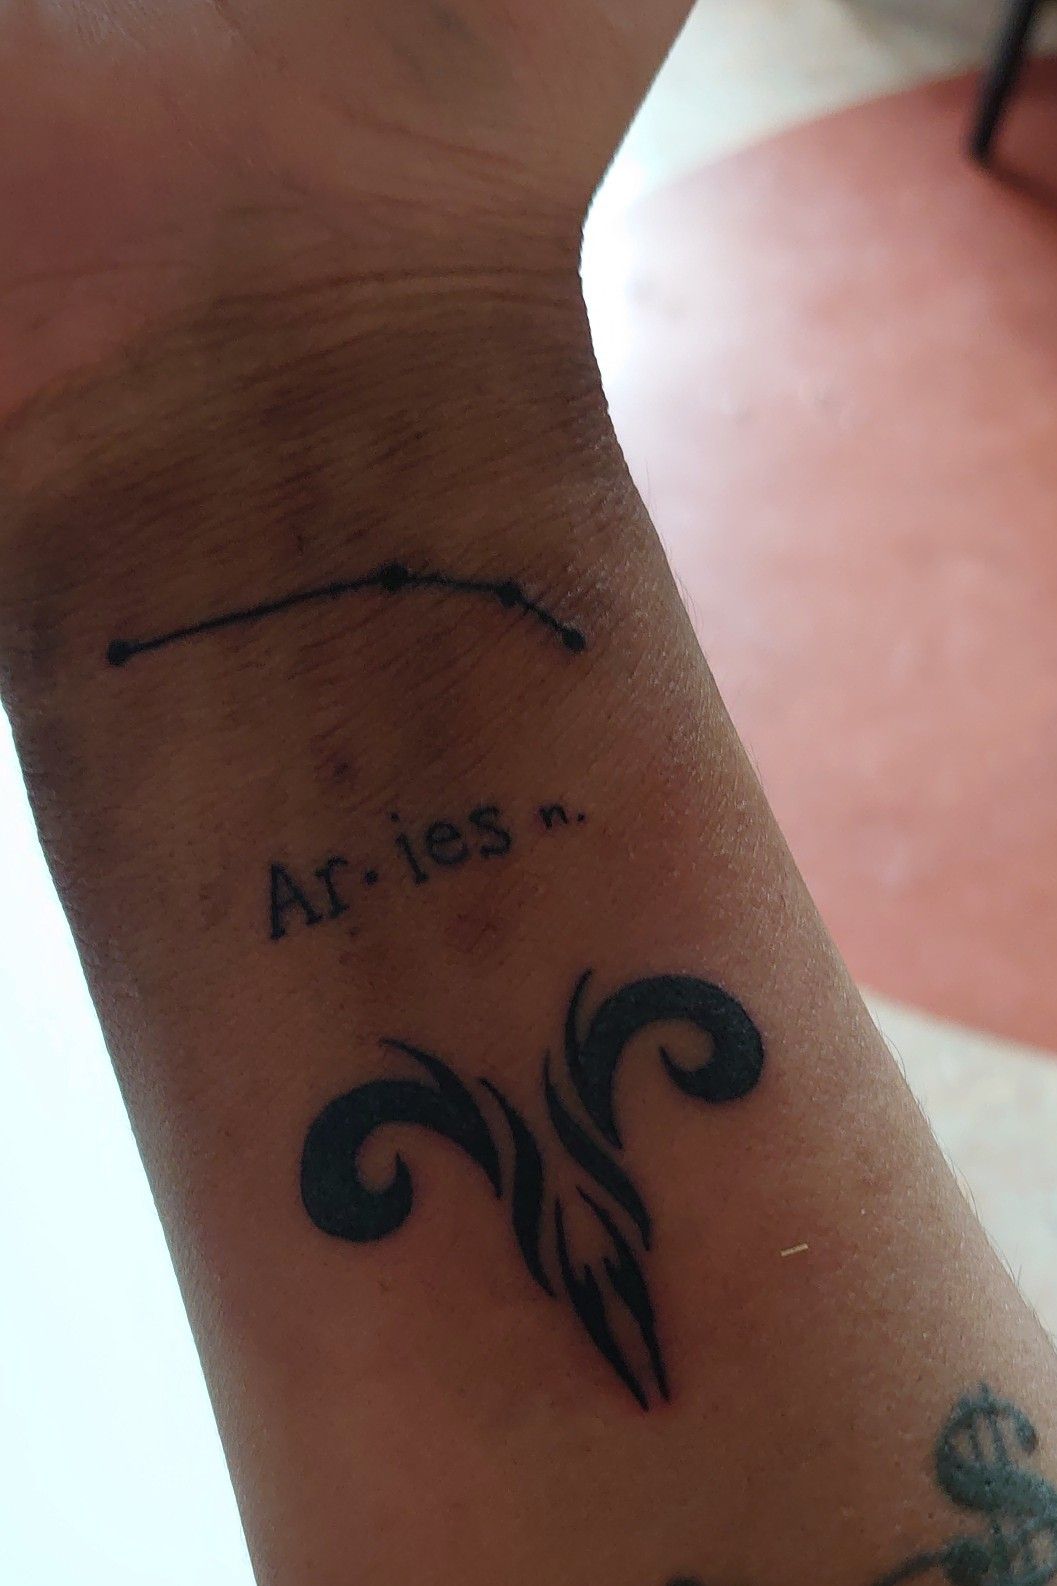 Aries Zodiac Sign Temporary Tattoo Sticker - OhMyTat